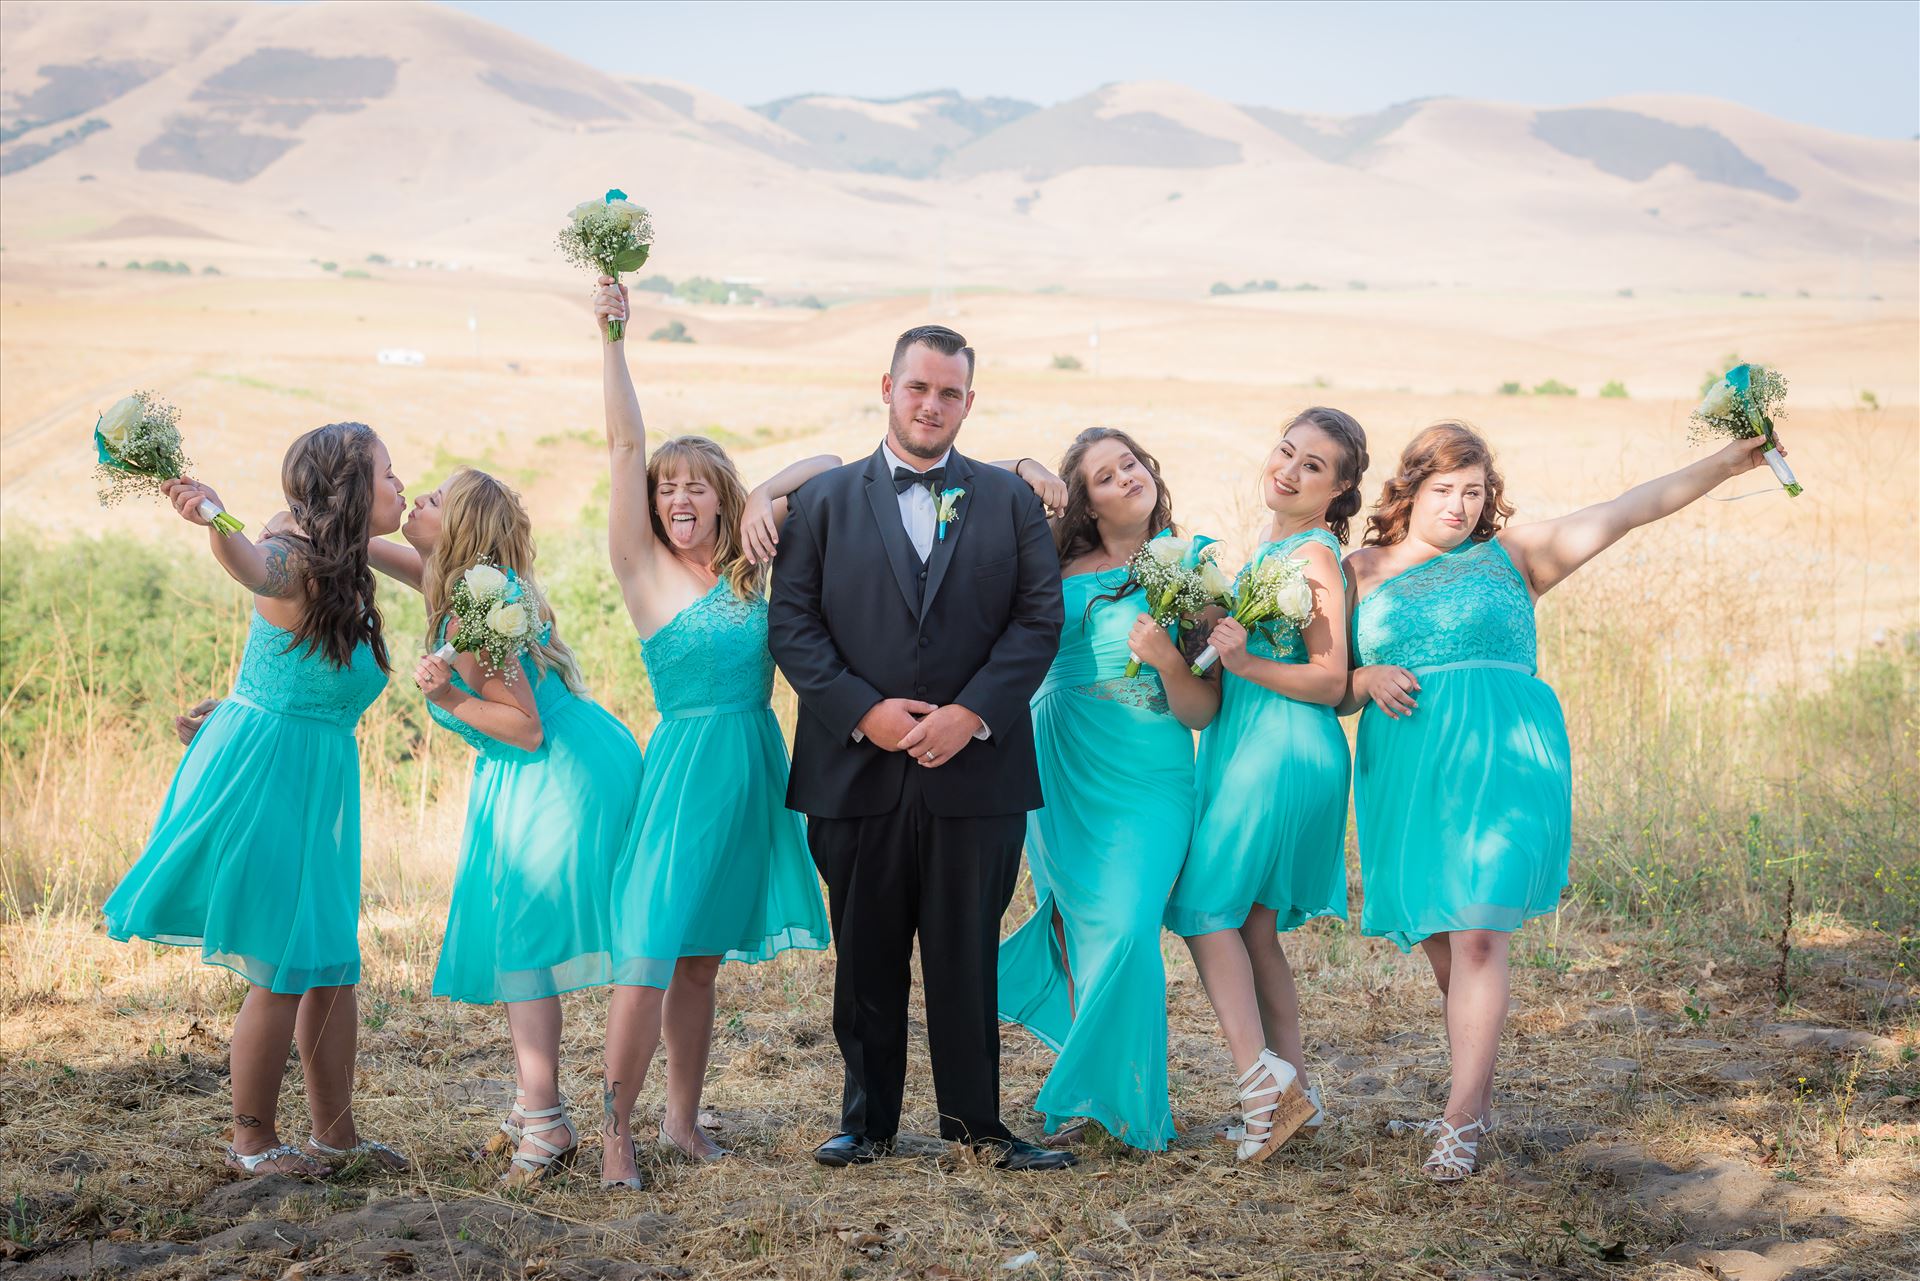 Cherie and Brandon 070 Mirror's Edge Photography, a San Luis Obispo Wedding Photographer, captures a wedding at the Historic Dana Adobe in Nipomo California.  Fun groom and bridesmaids. by Sarah Williams